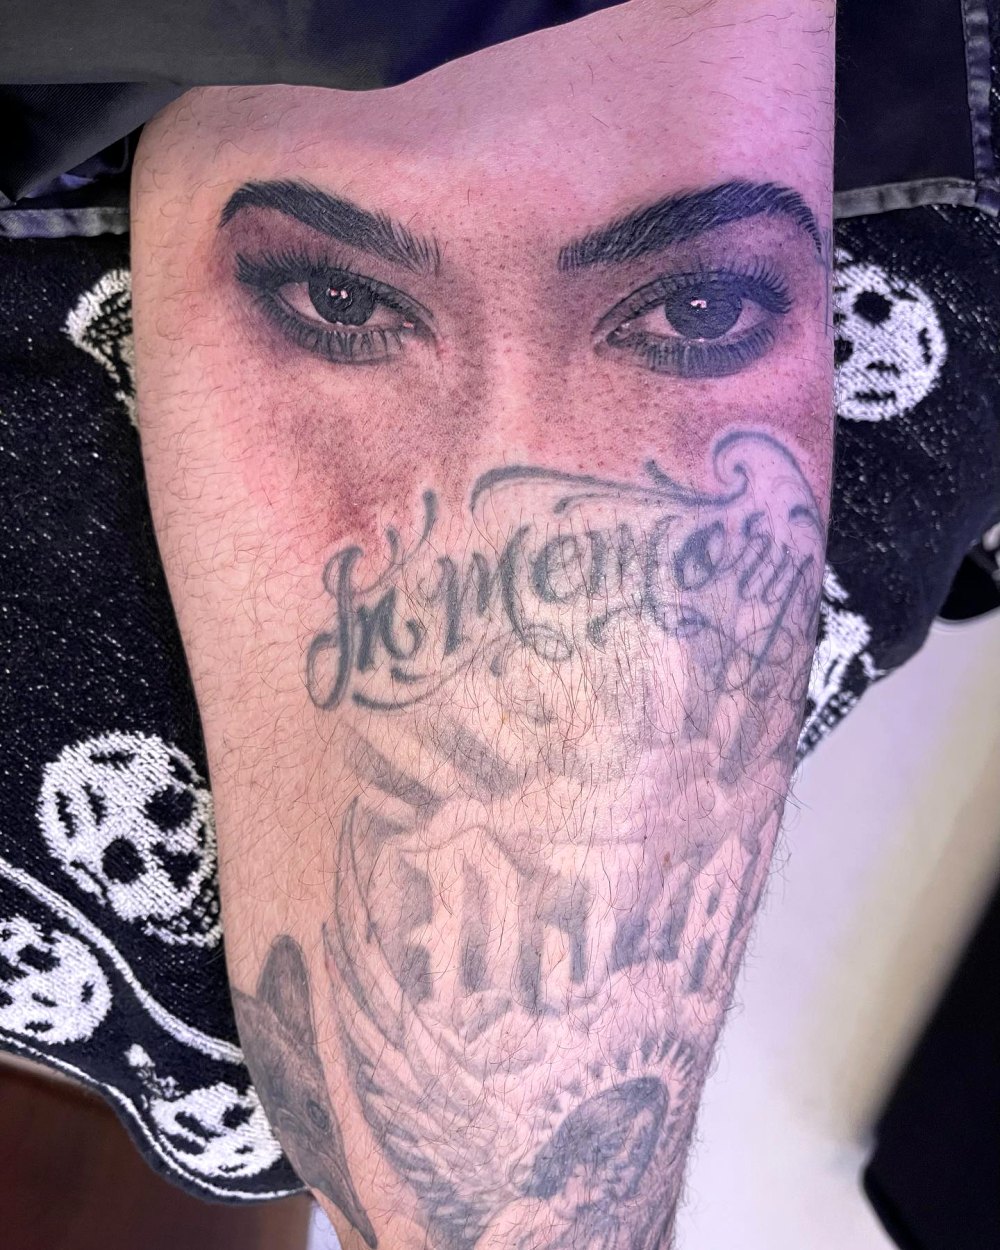 Travis Barker Debuts Tattoo of Wife Kourtney Kardashian's Eyes on His Thigh